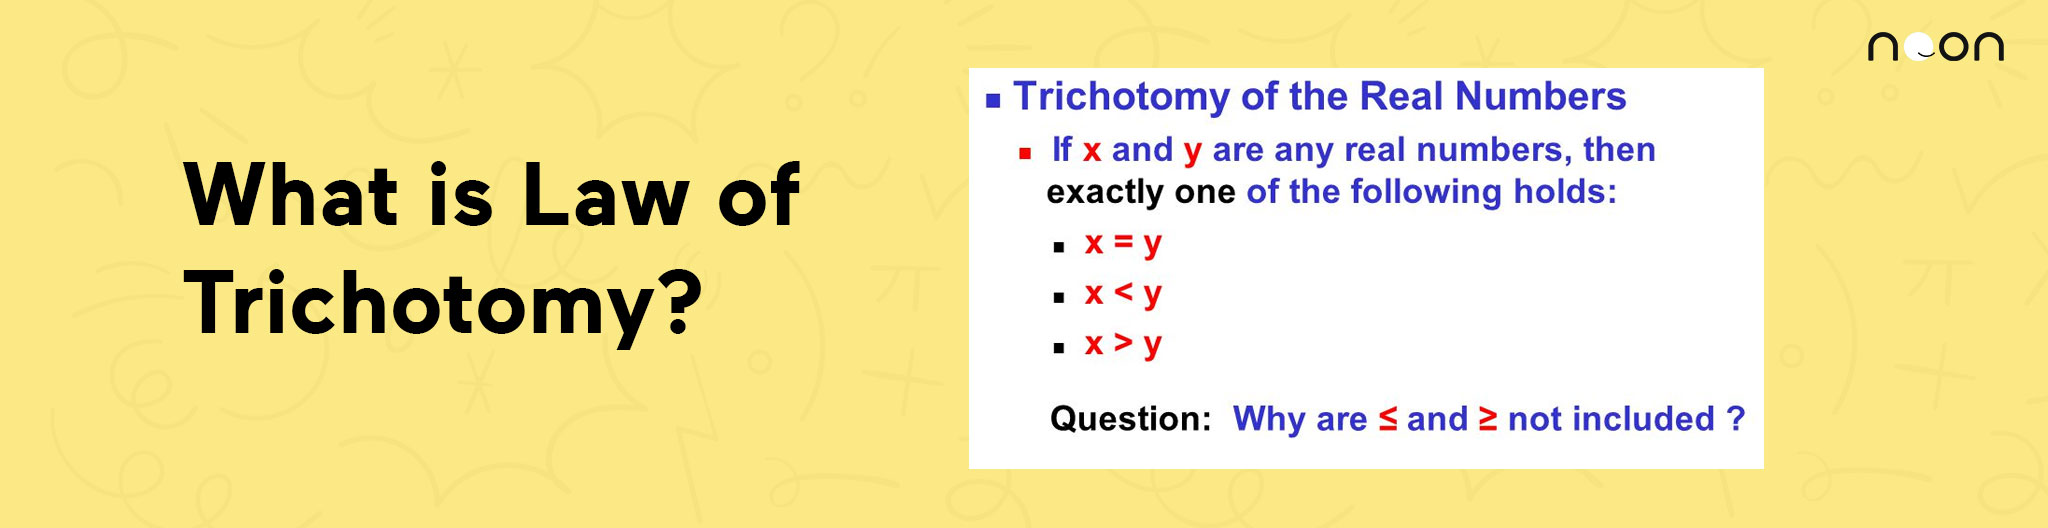 Law of Trichotomy